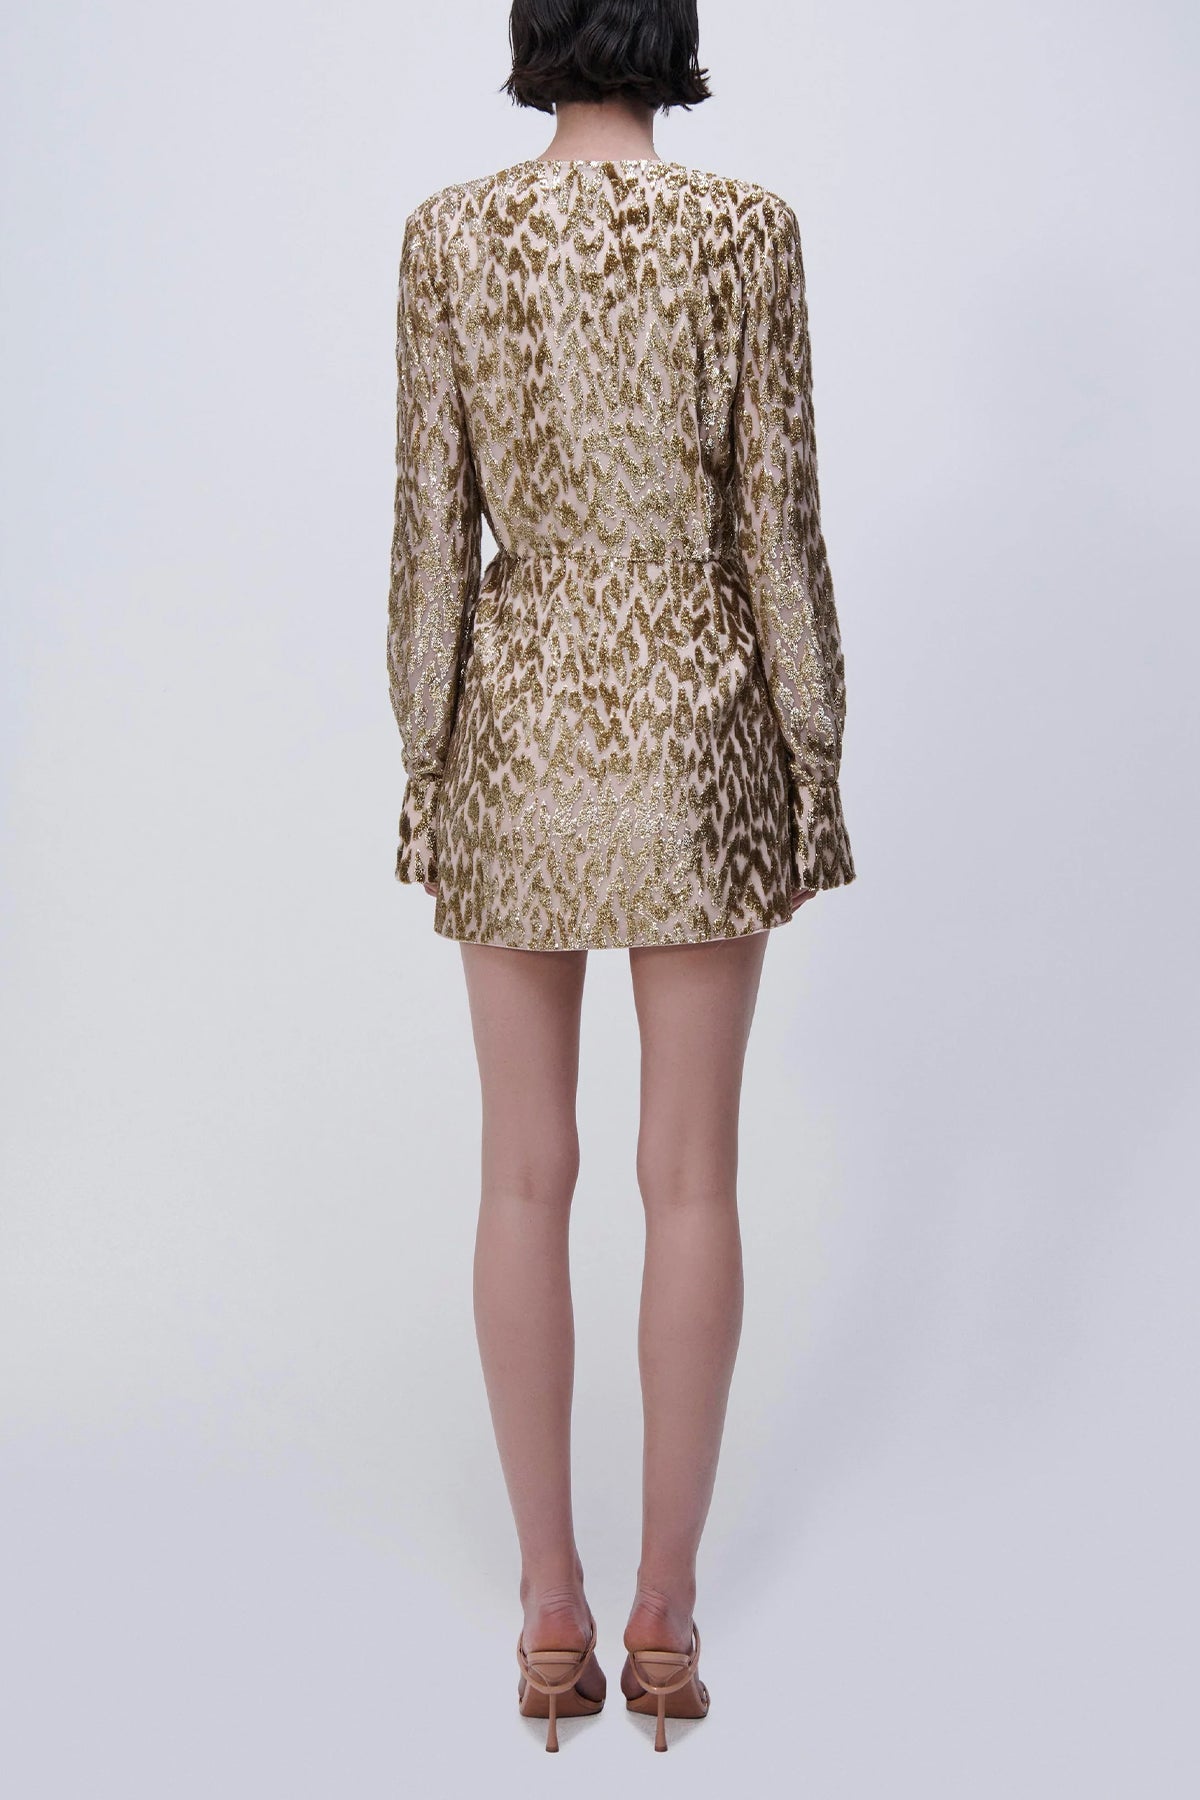 Camryn Metallic Mini Dress in Gold - shop-olivia.com